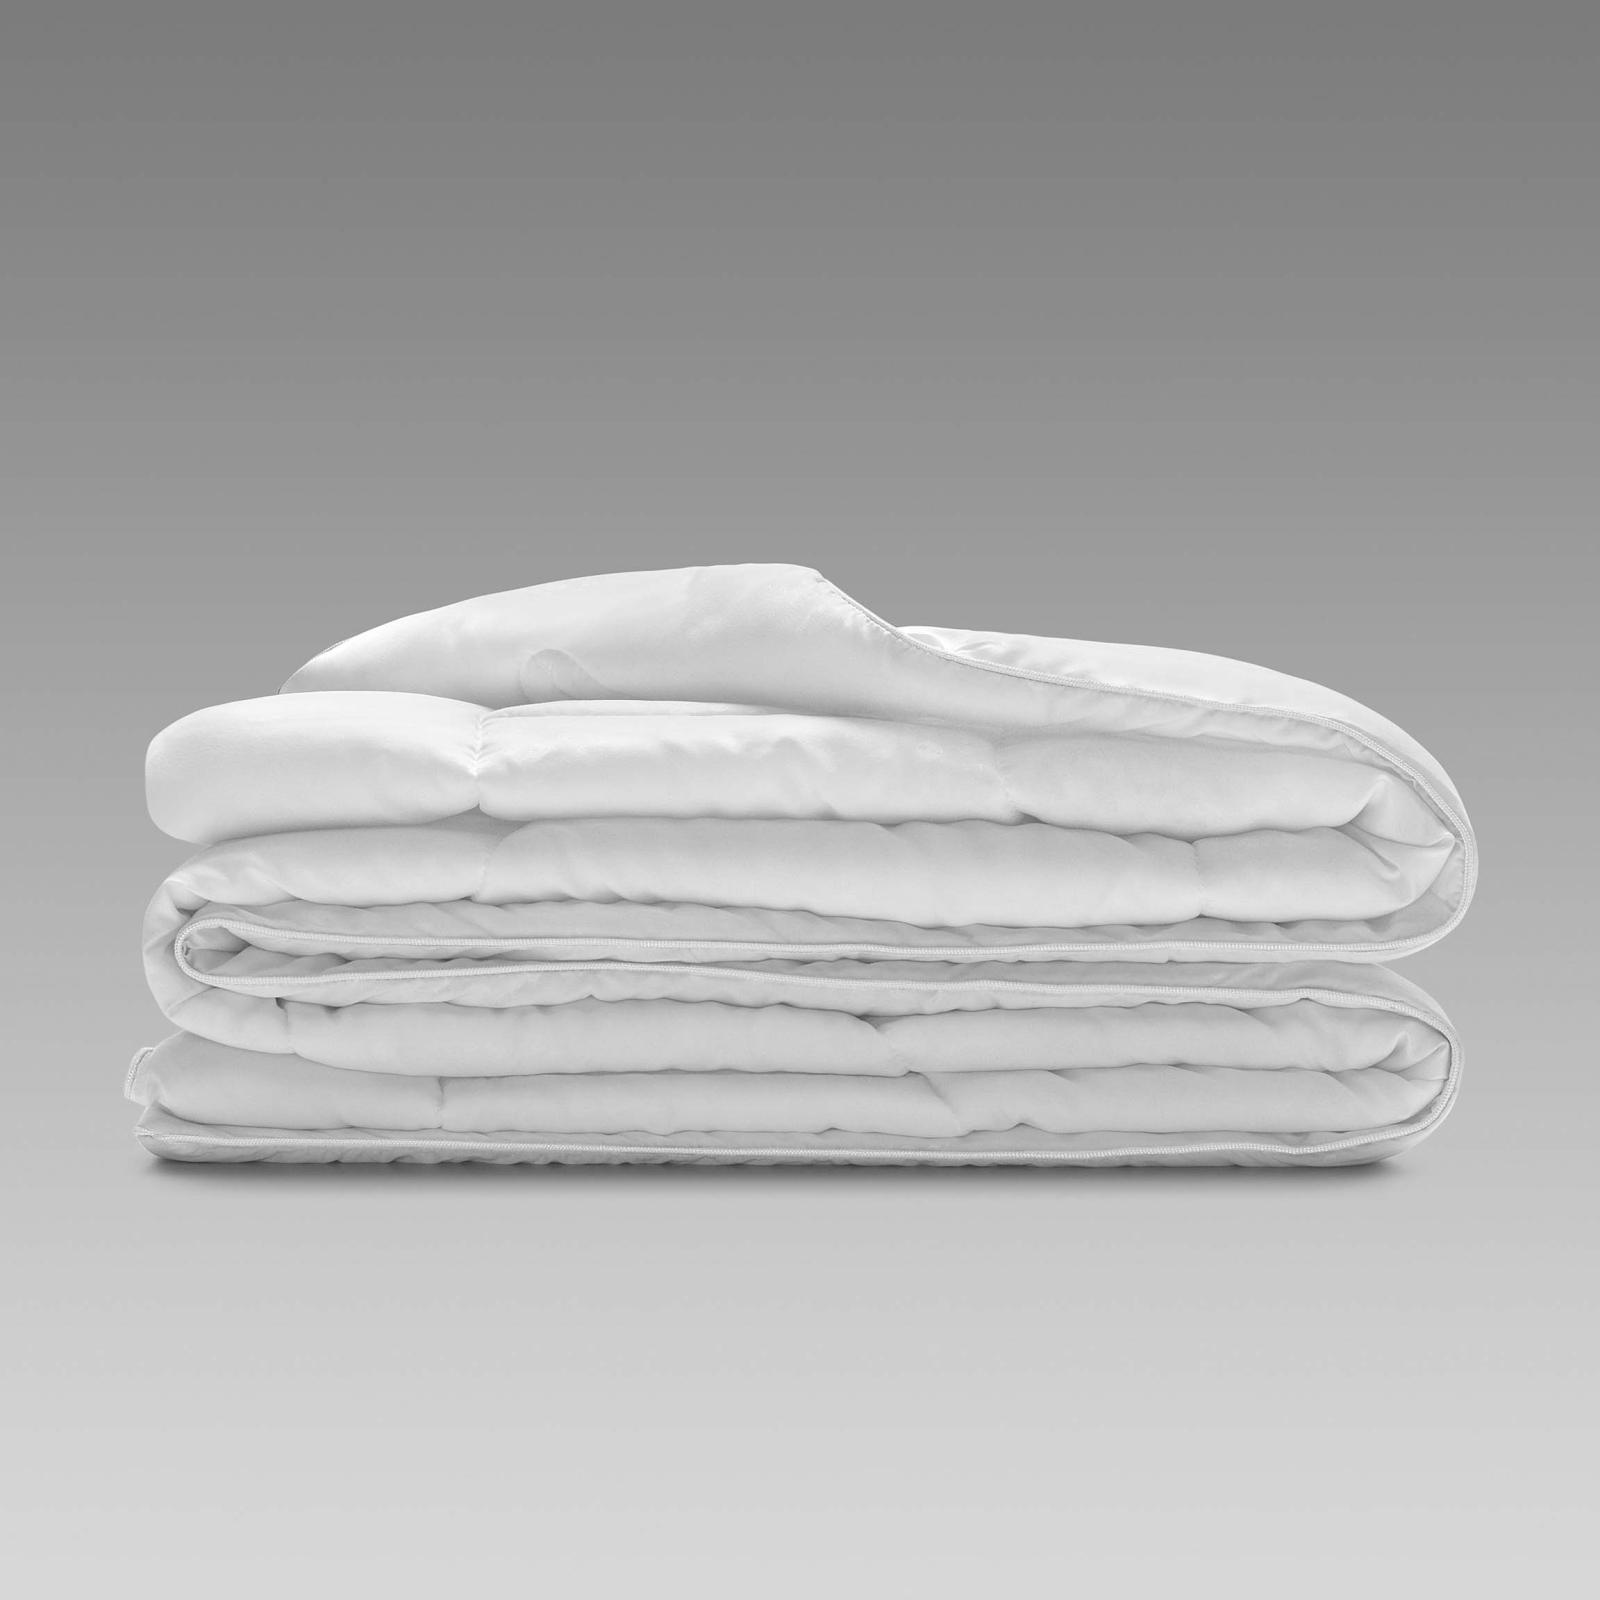 Одеяло Гелиос 140х200 см (20.04.12.0120), цвет белый, размер 140х200 см - фото 2